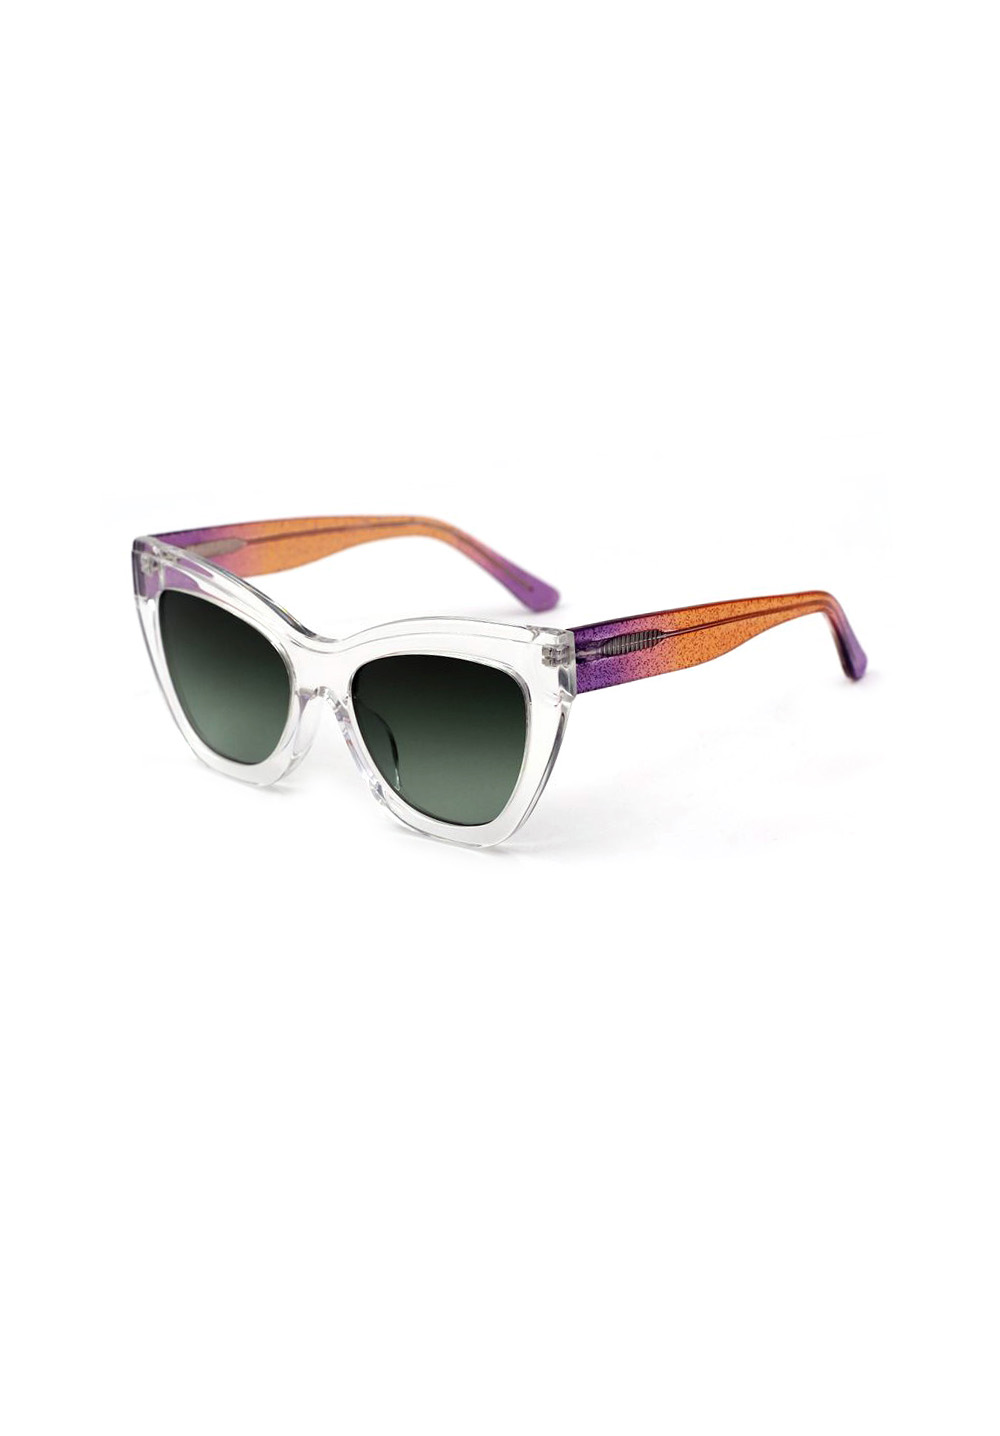 Female fashion sunglasses in colors acetate